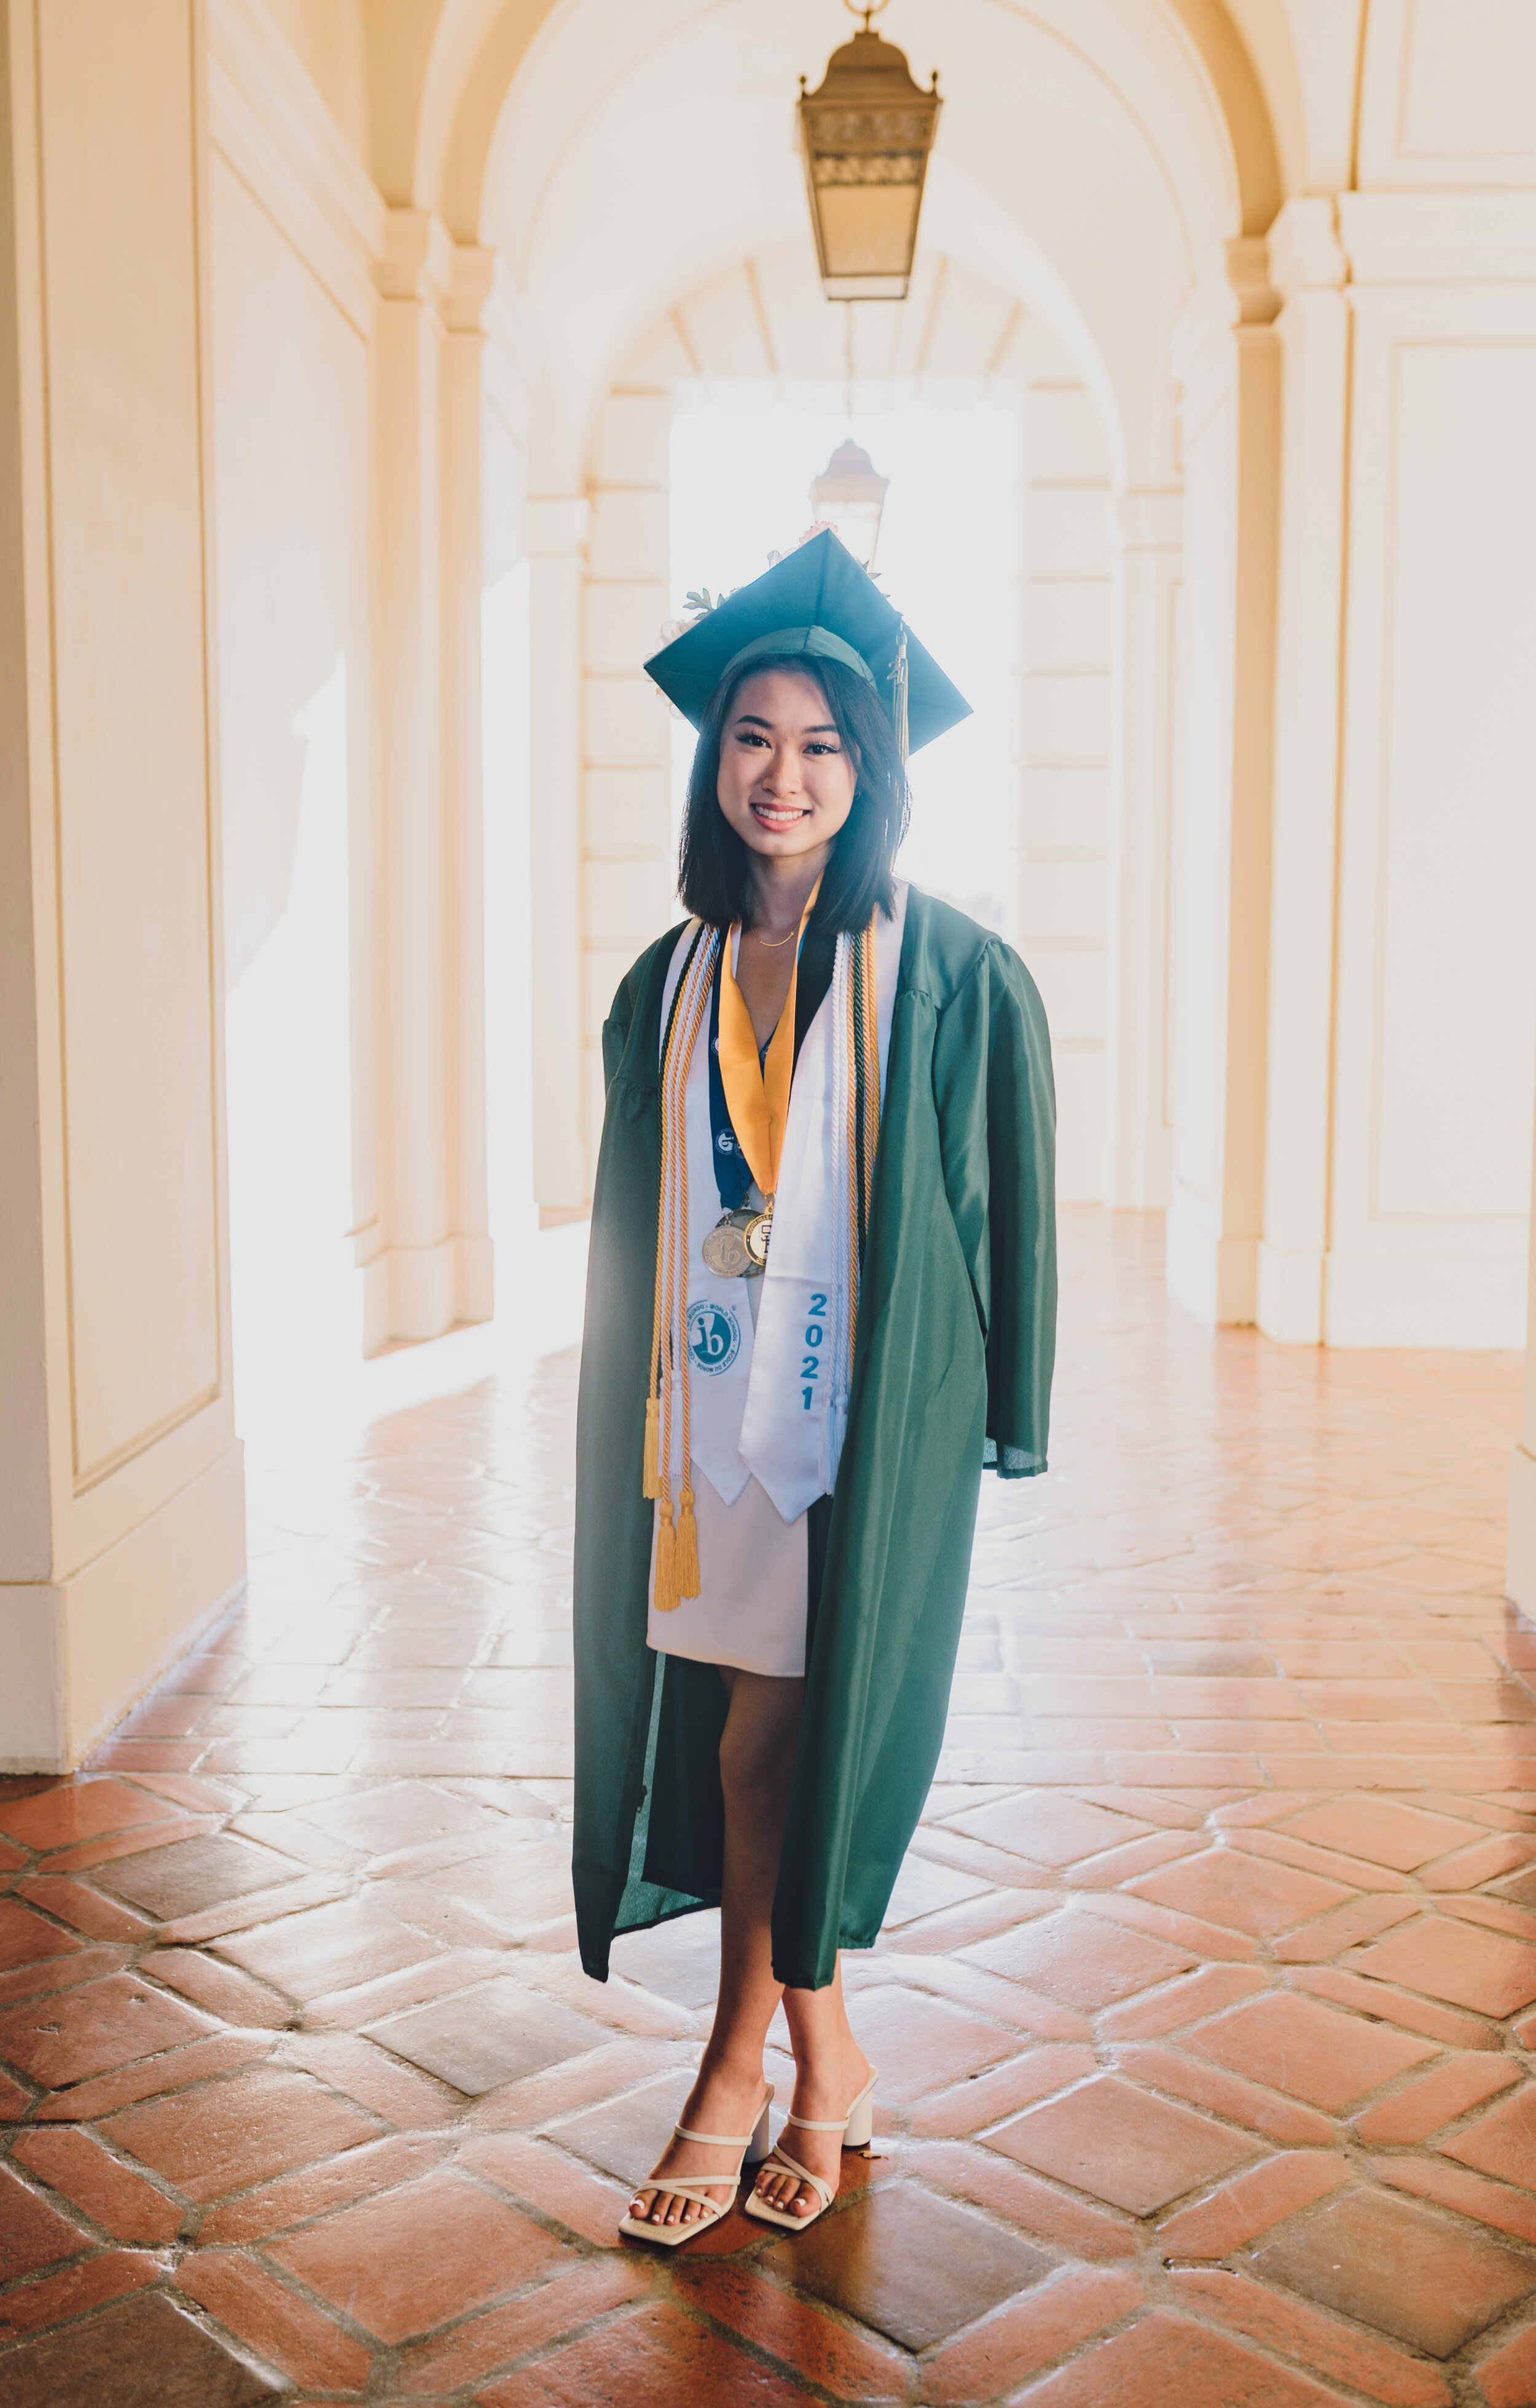 LosAngeles-Graduation-Portrait-Photographer-High-School-3.jpg